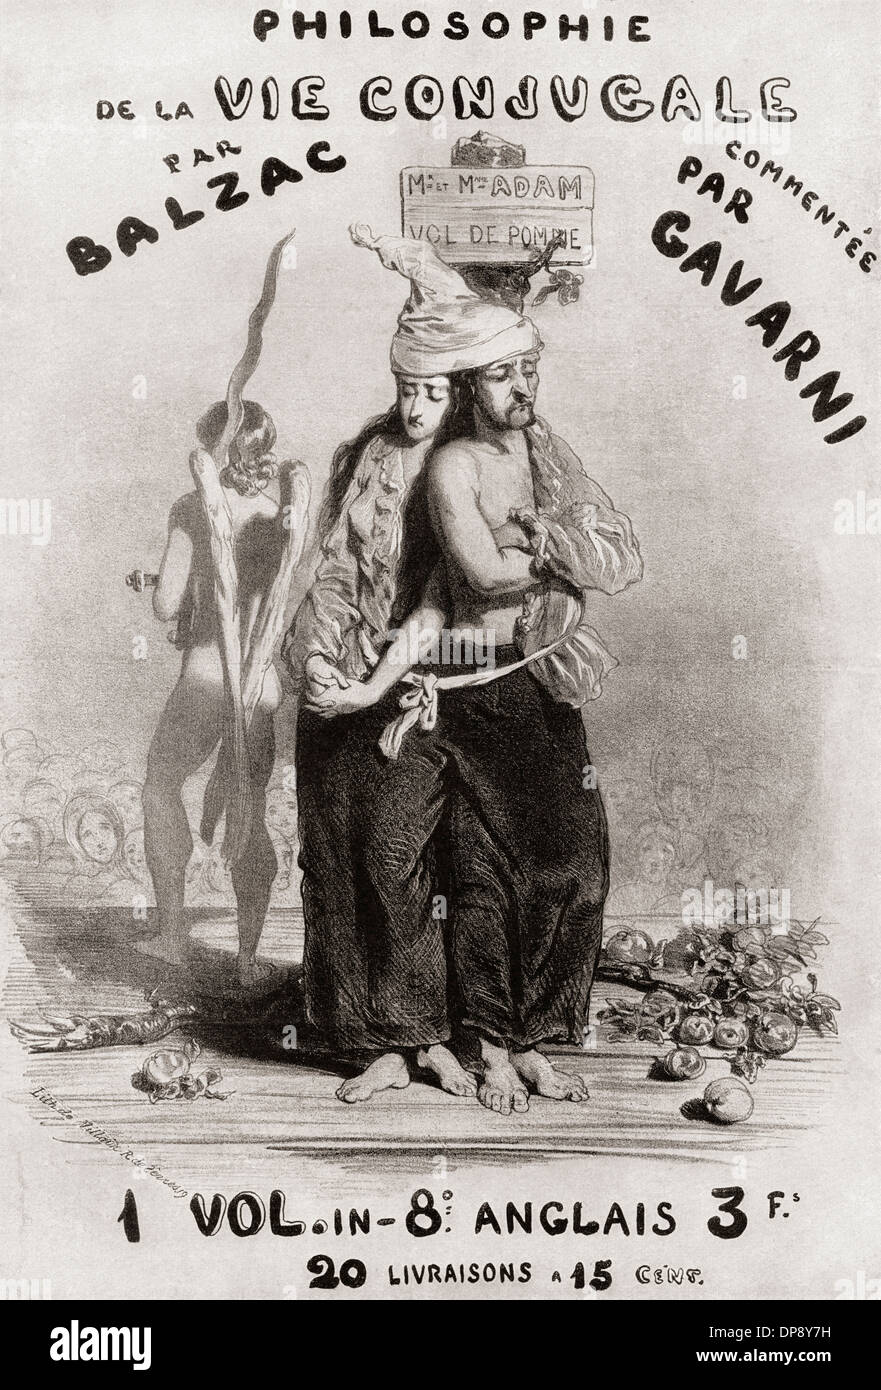 Illustration von Paul Gavarni für "Philosophie De La vie Conjugale" von Honoré de Balzac, 19. Jahrhundert. Stockfoto